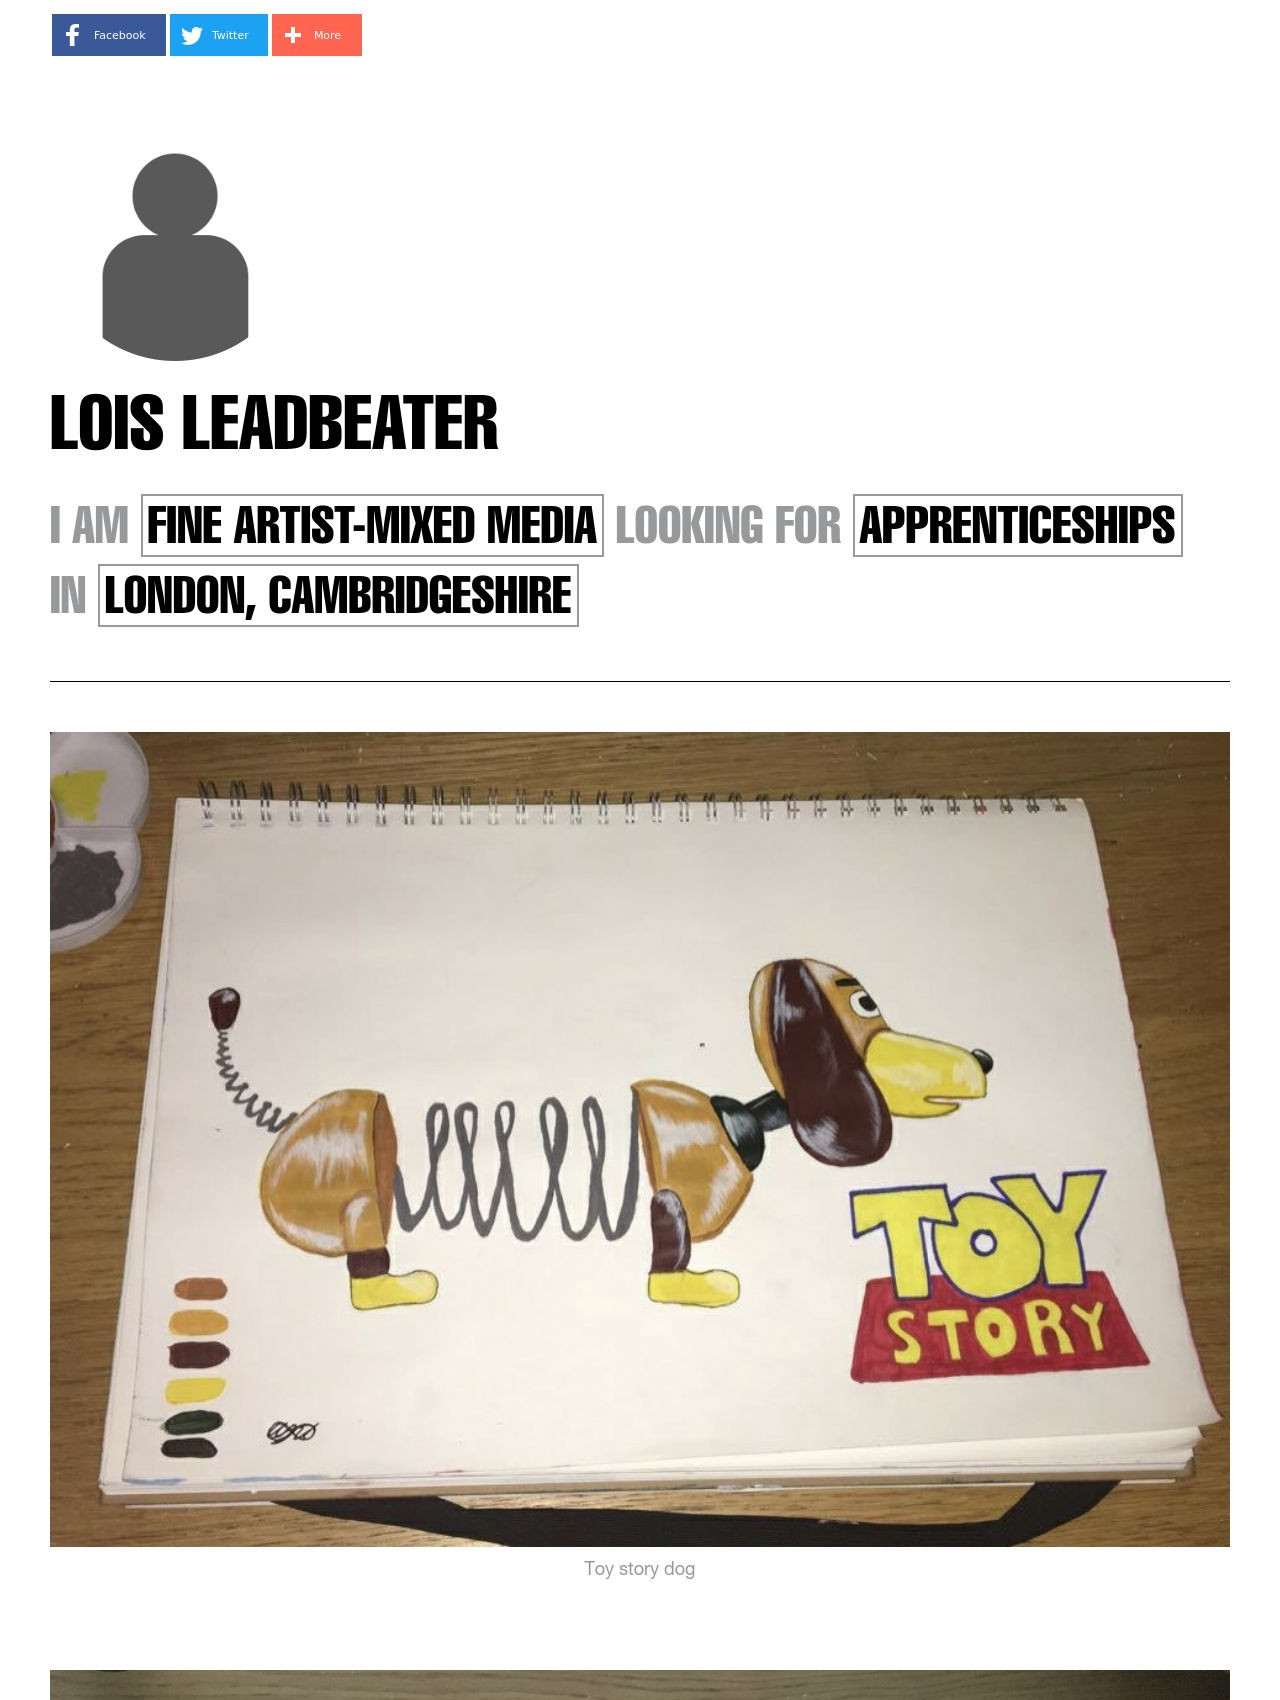 Lois Leadbeater